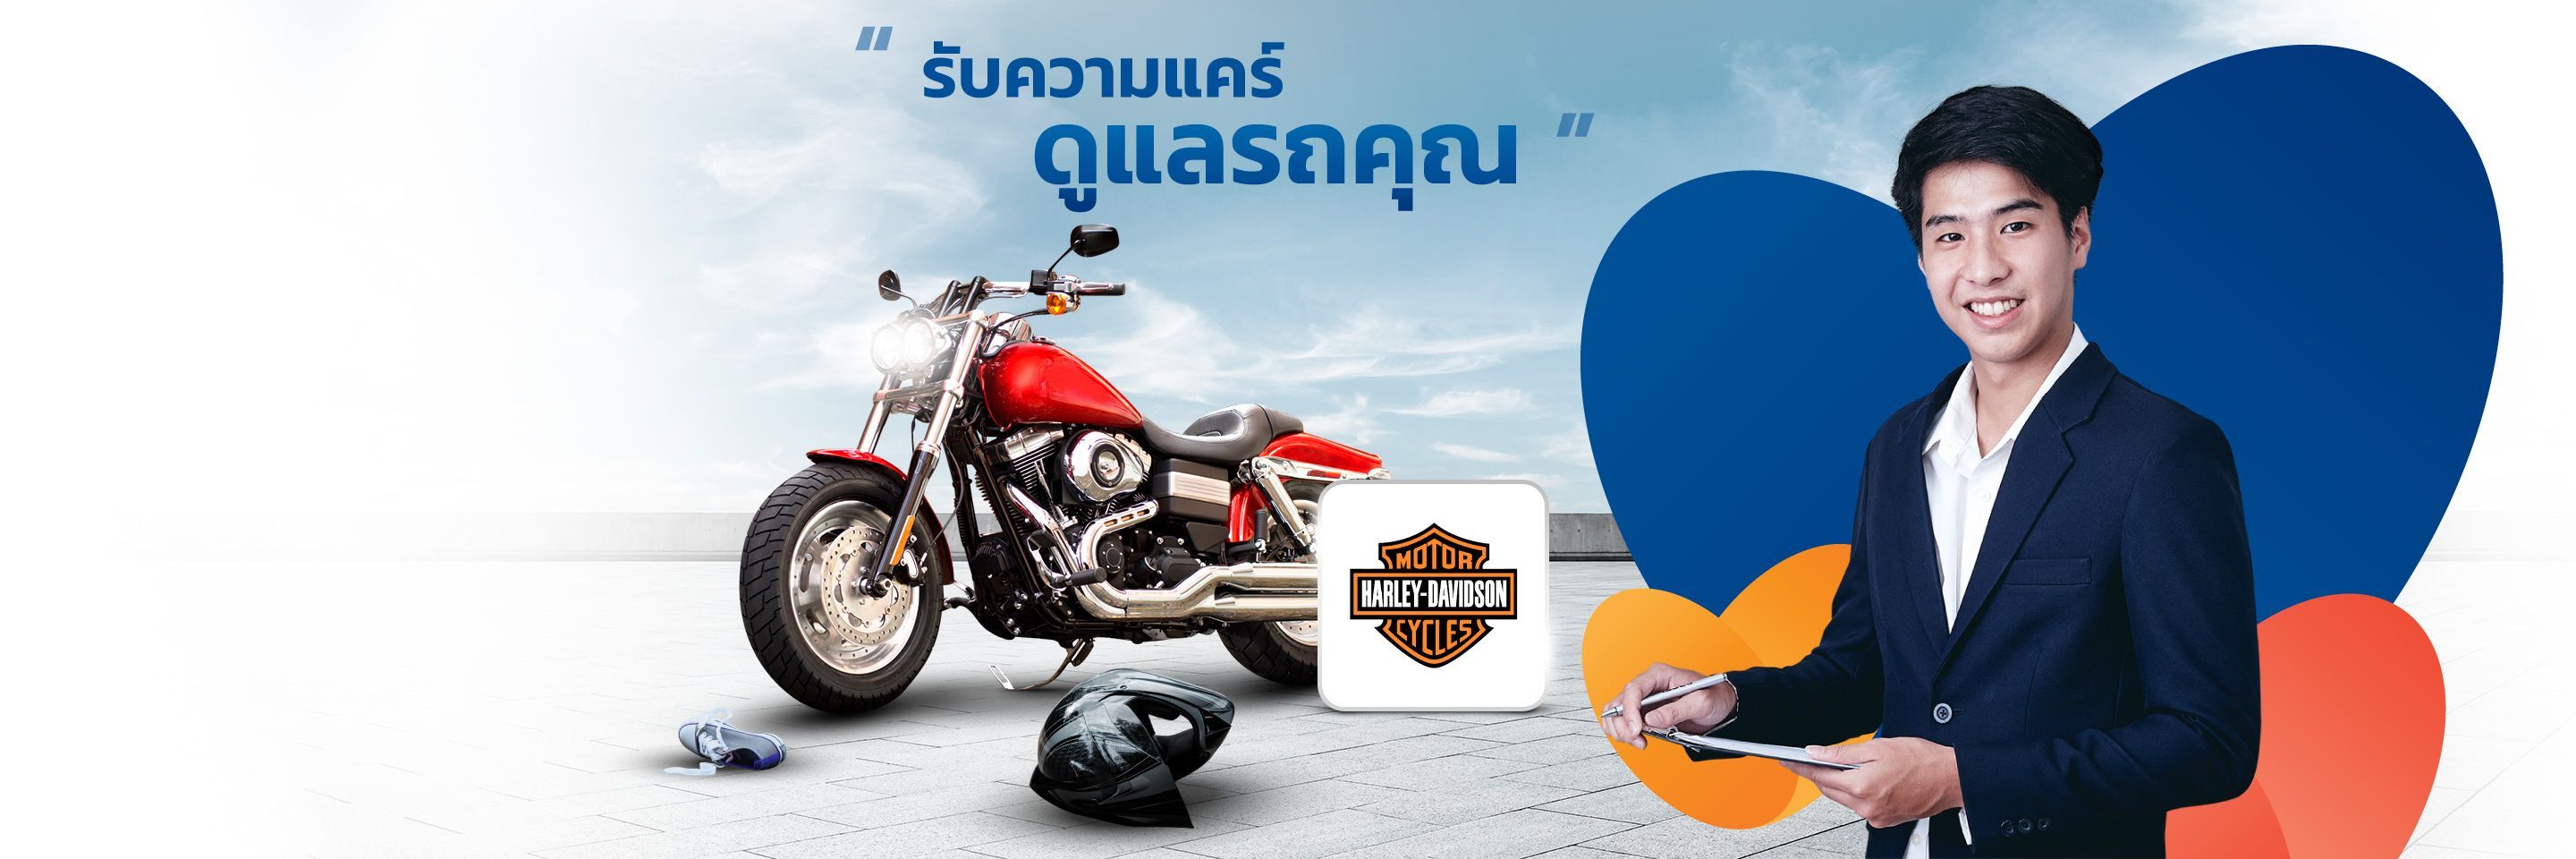 Motorbike Brand_Slider_Top banner Harley davidson.jpg